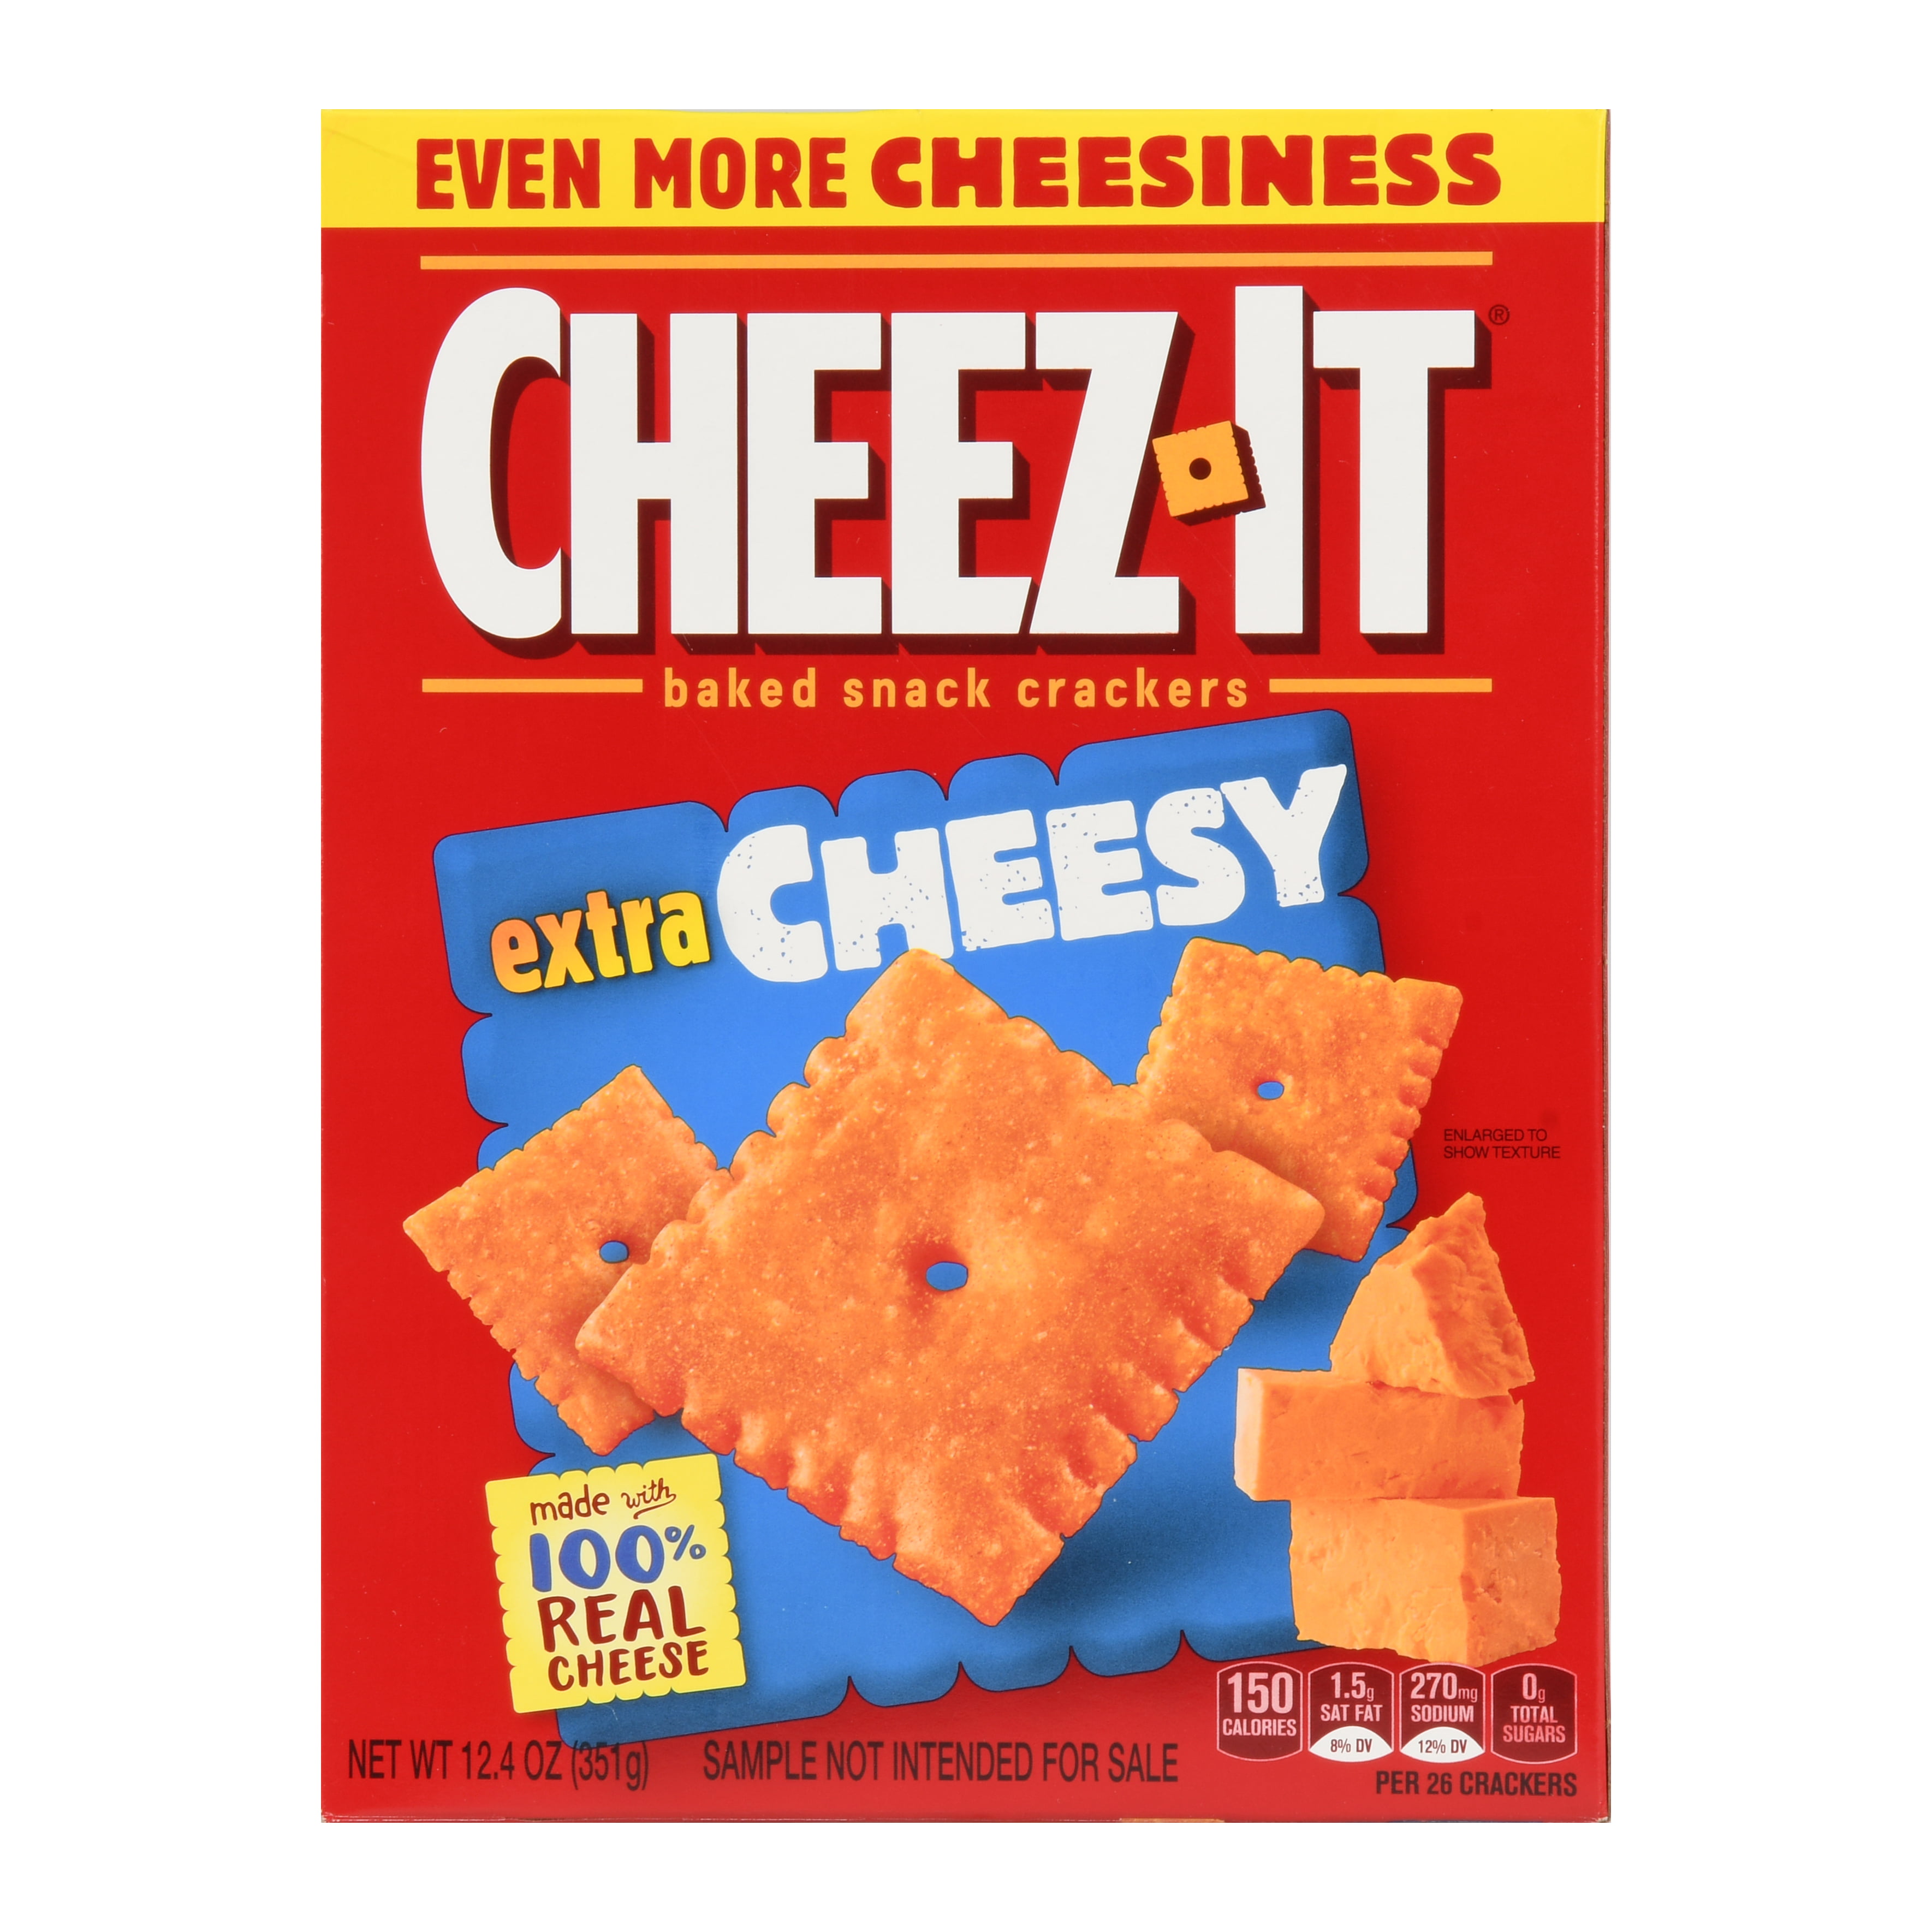 CheezIt Extra Cheesy Baked Snack Crackers 12.4 oz